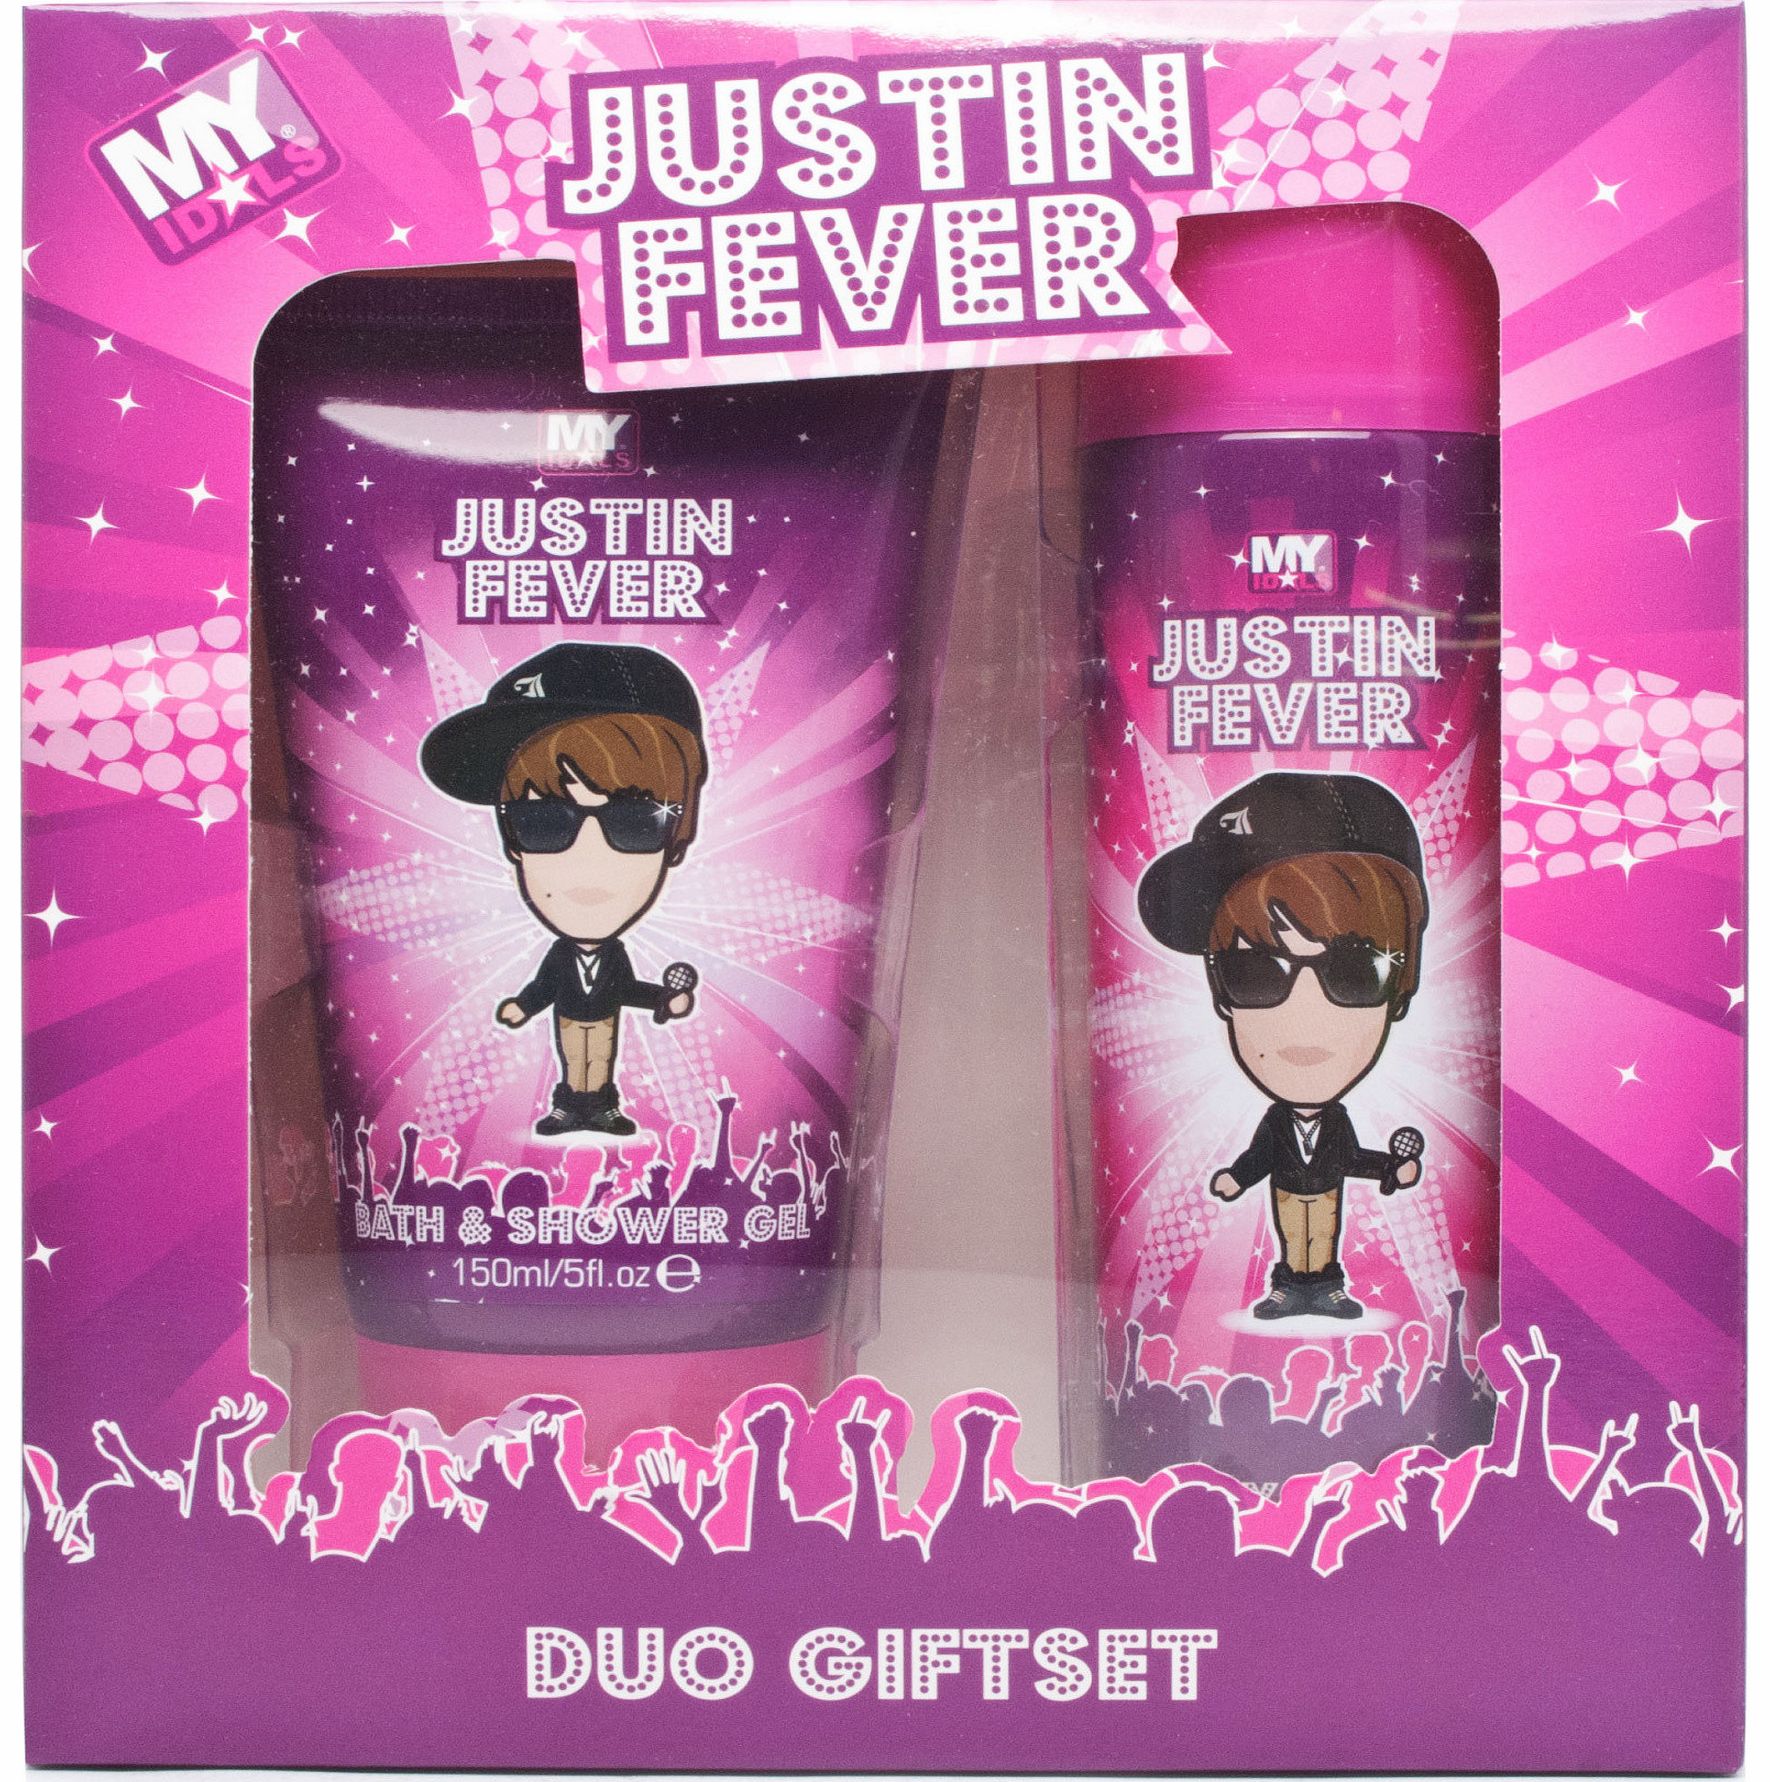 My Idols Justin Fever Duo Set